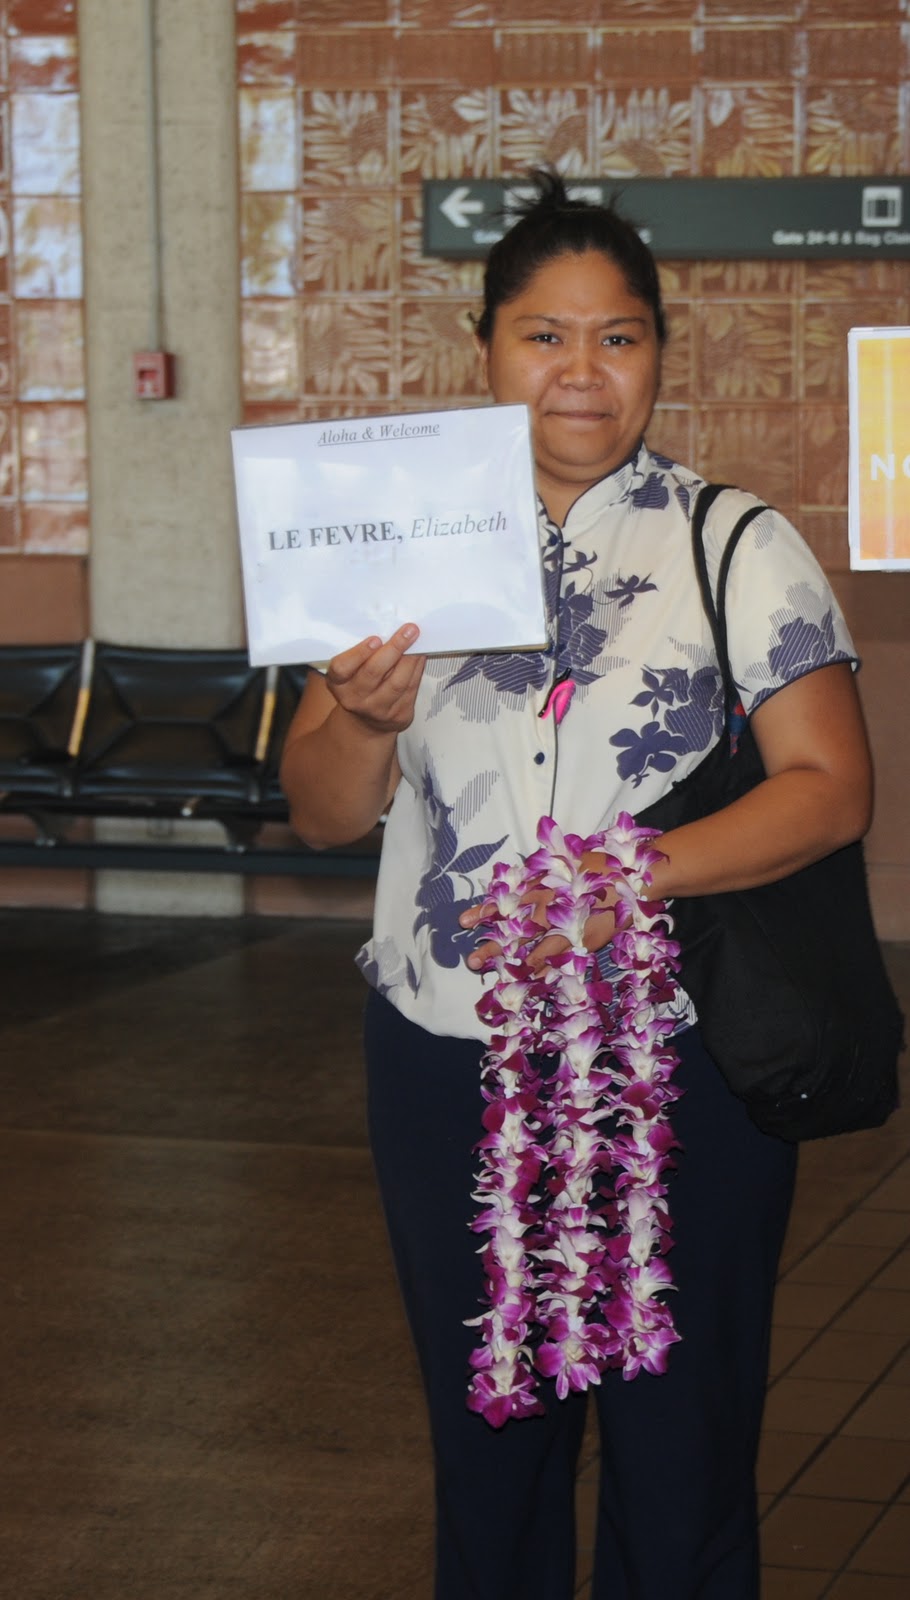 Honolulu Airport Transportation